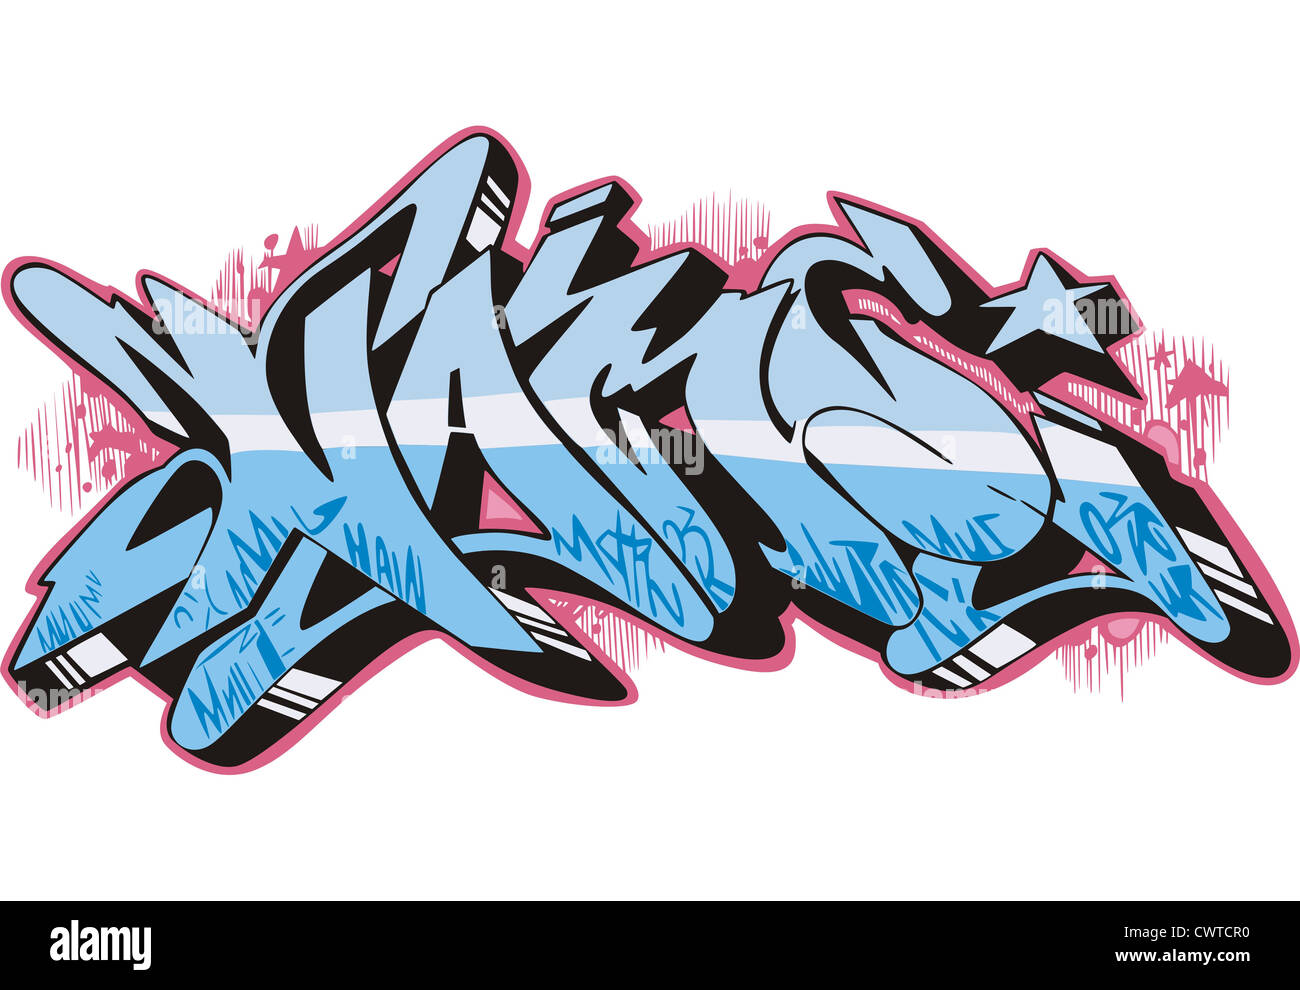 Graffito text design - name. Color vector illustration Stock Photo - Alamy